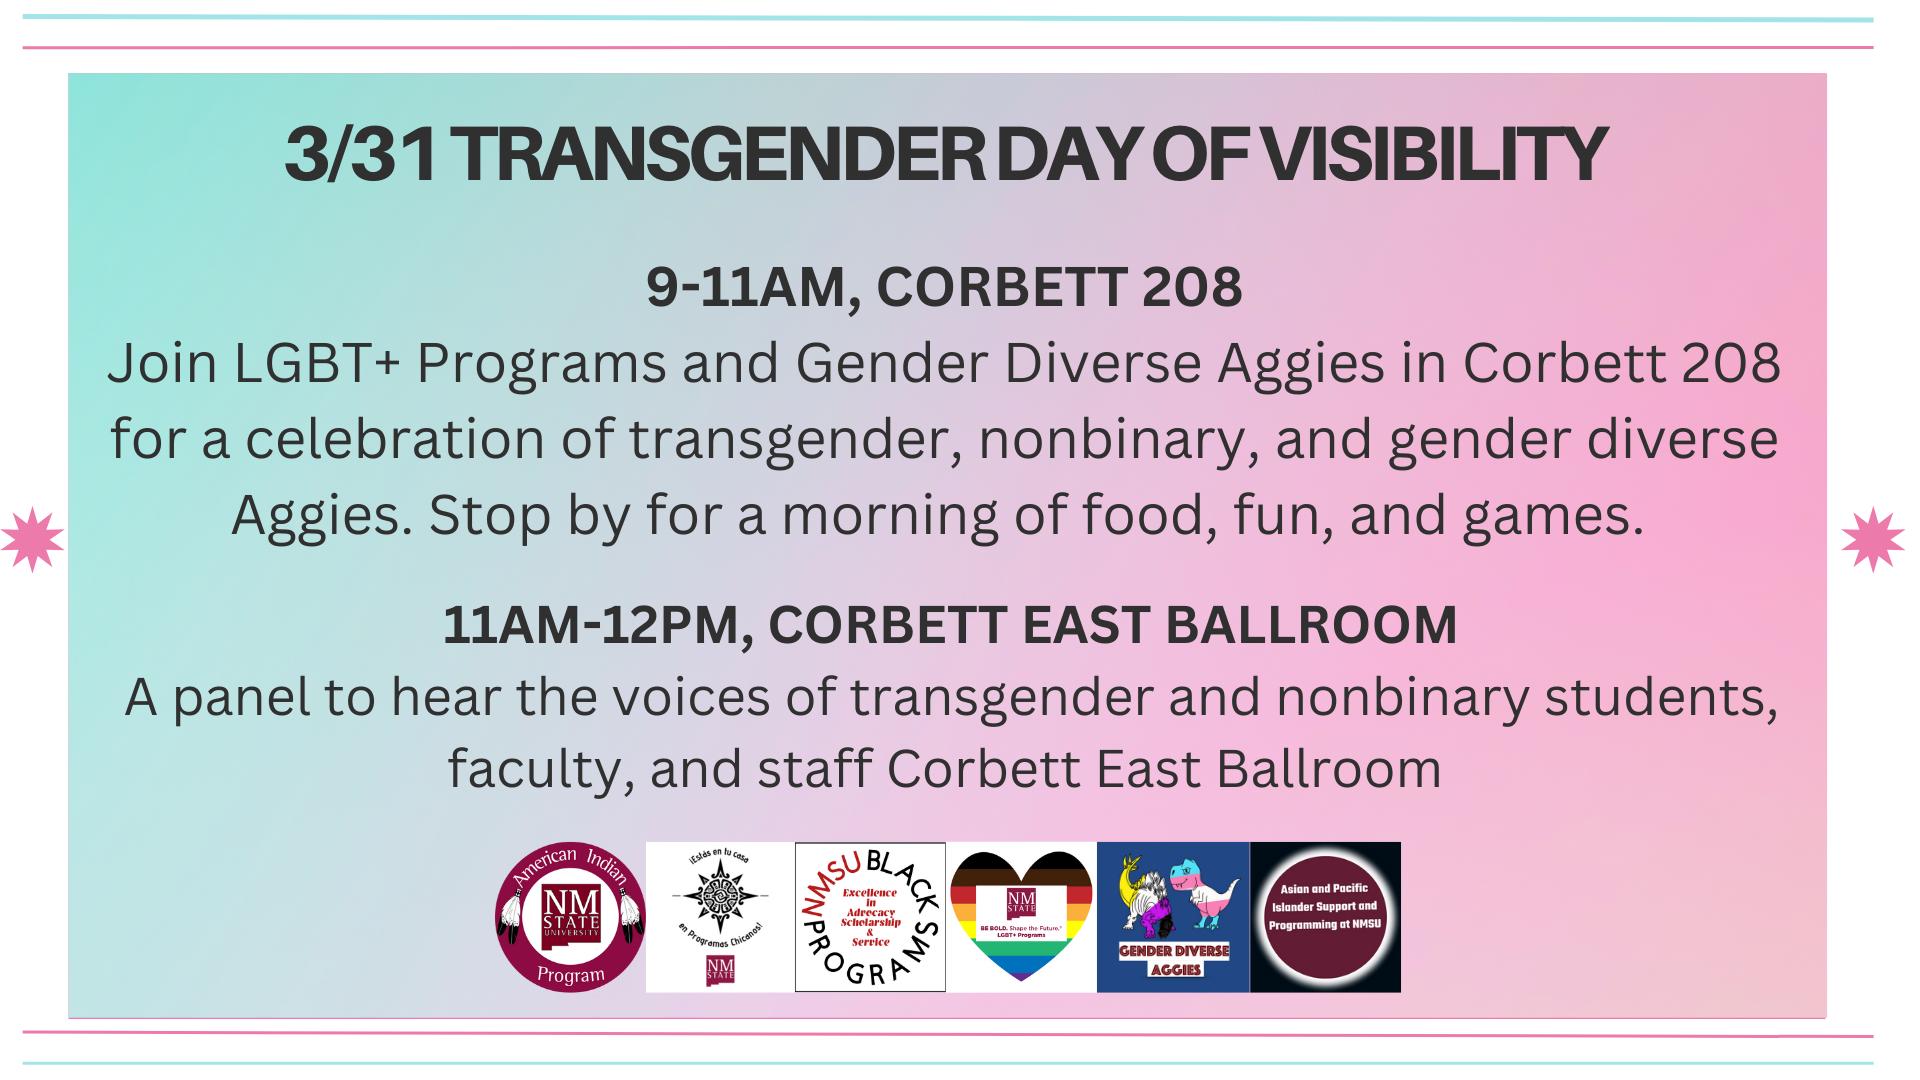 Transgender Day of Visibility 2023